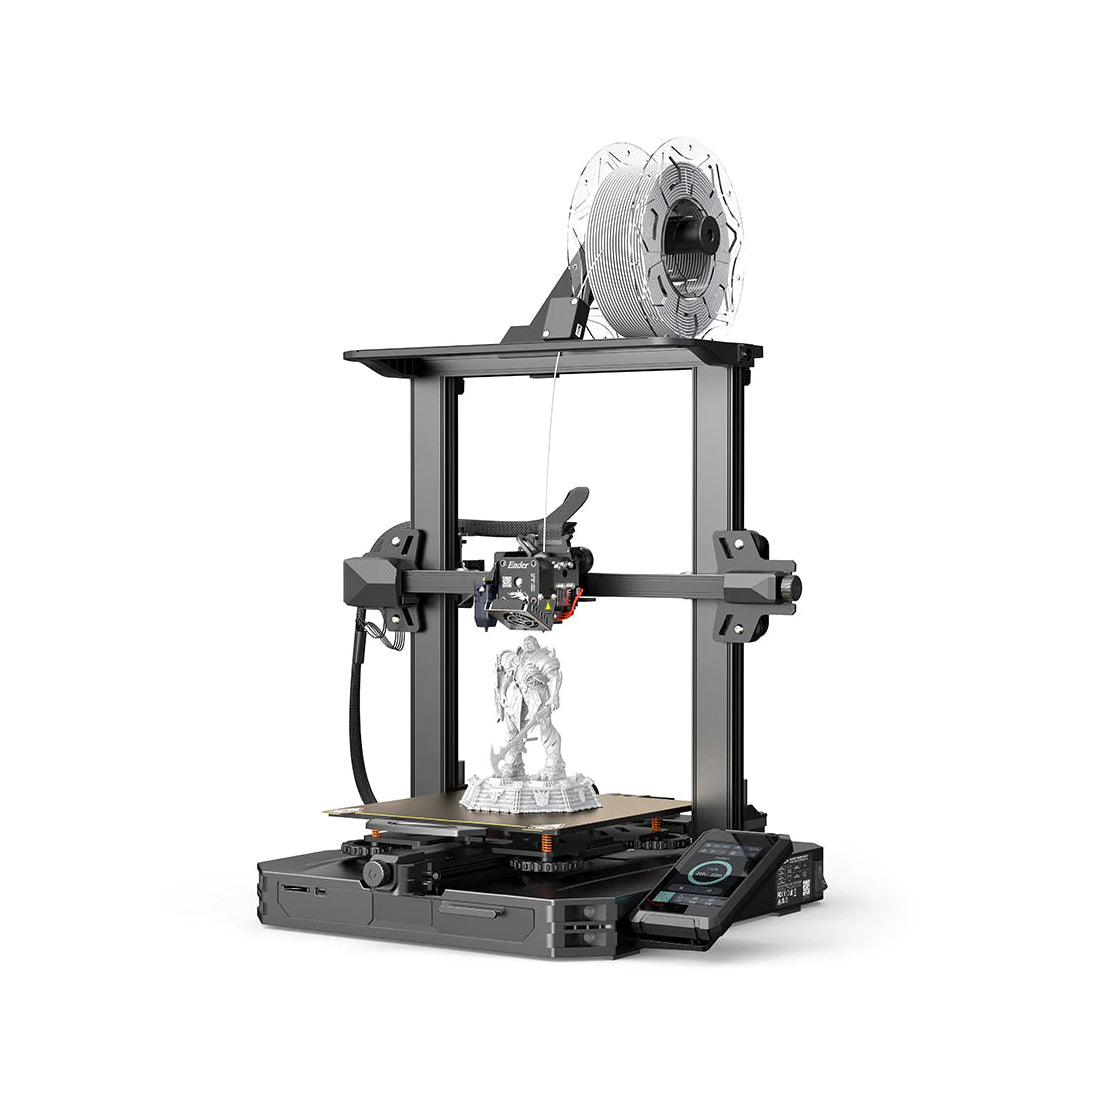 Voltaat Creality Ender 3 S1 Pro - 3D Printer - طابعة - Store 974 | ستور ٩٧٤